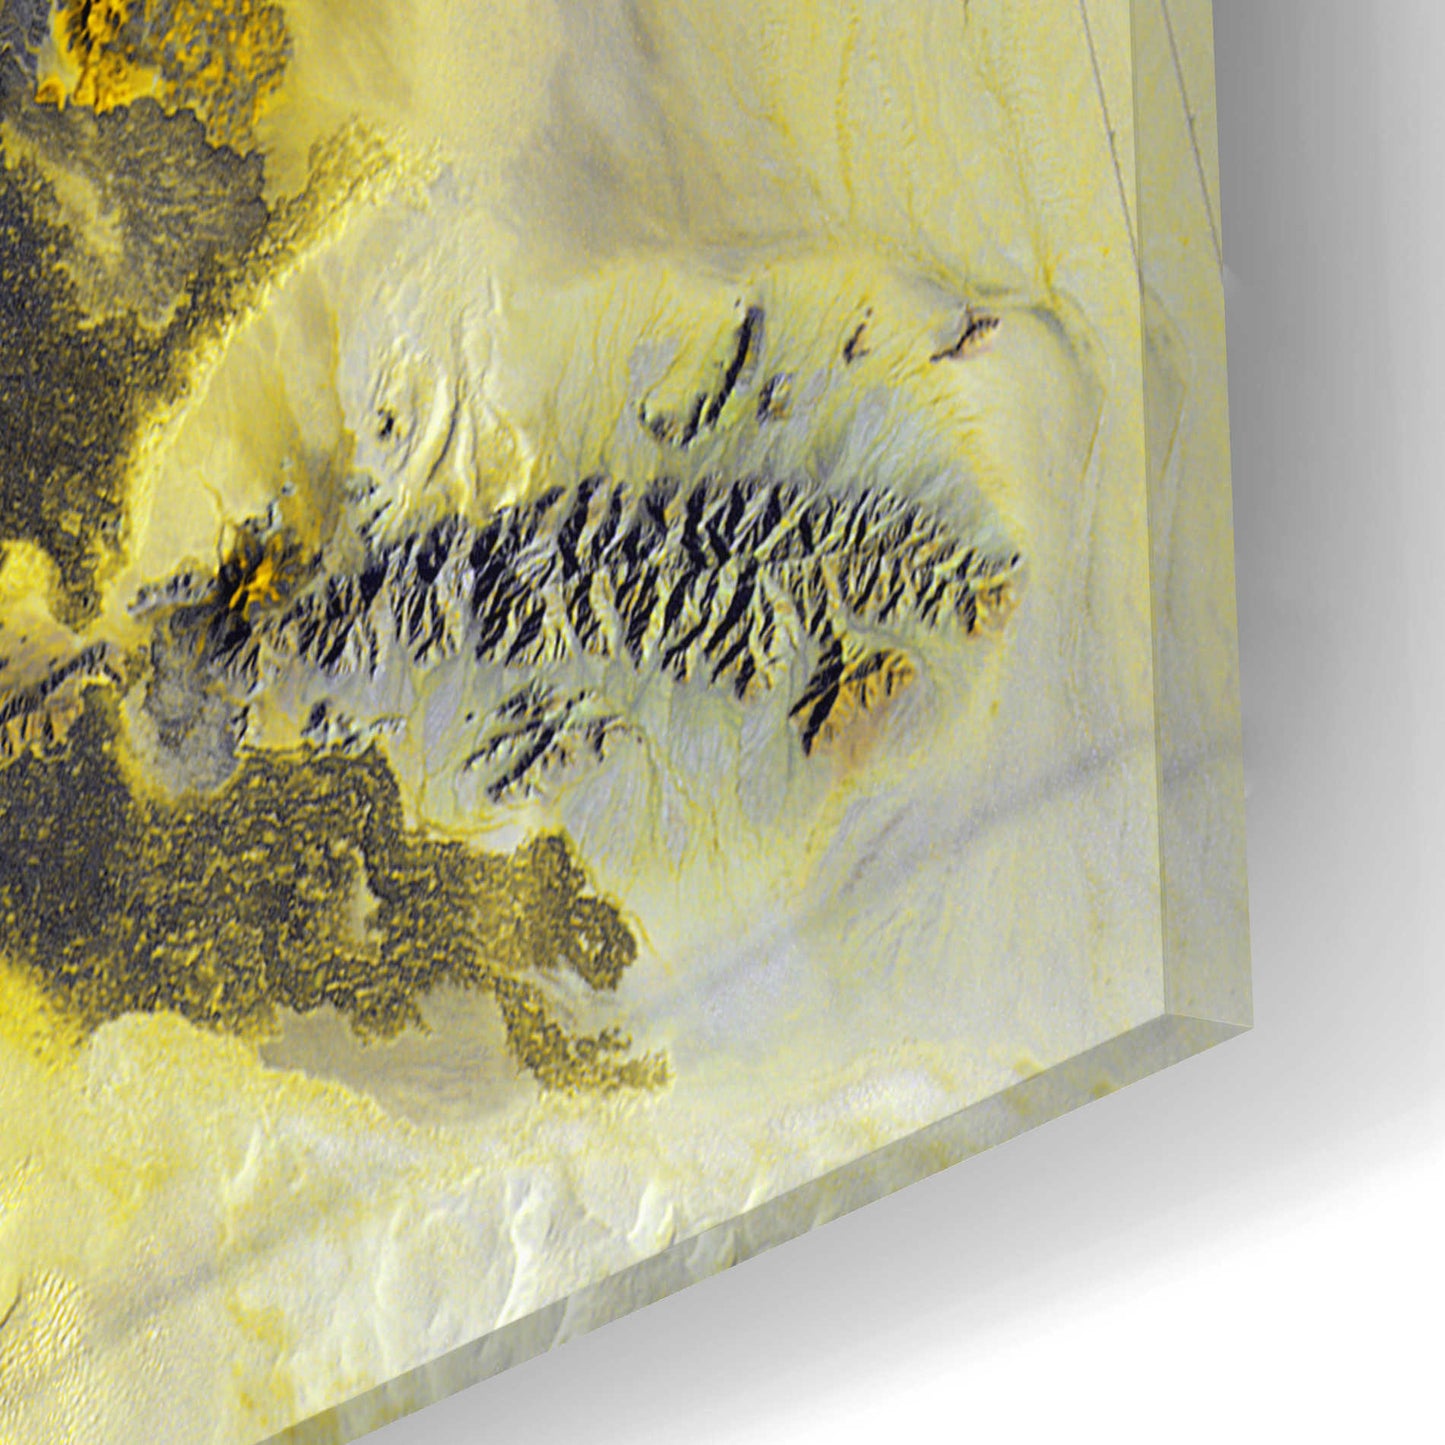 Epic Art 'Earth as Art: Pinacate Volcano' Acrylic Glass Wall Art,12x12